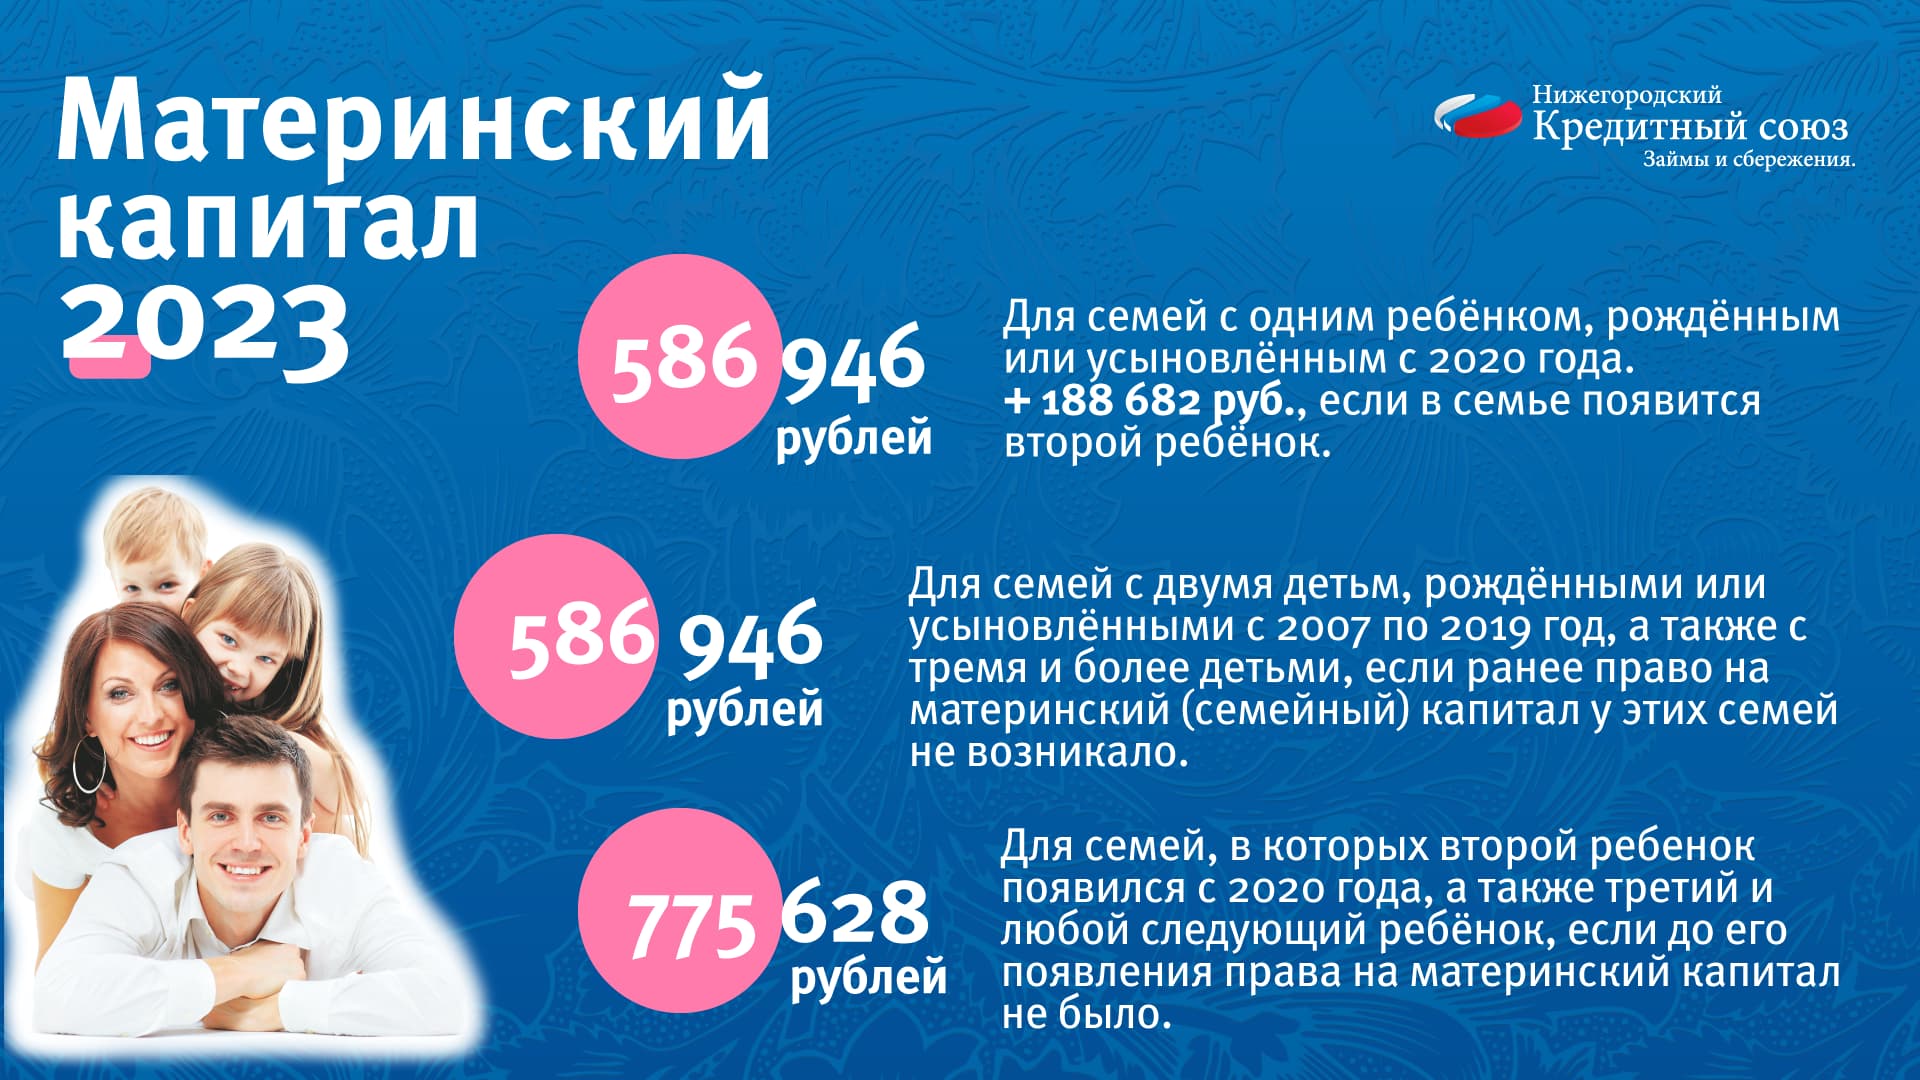 Материнский капитал в россии 2023. Материнский капитал в 2023 году. Сумма материнского капитала в 2023. Сумма мат капитала в 2023 году. Размер материнского капитала в 2023 году.